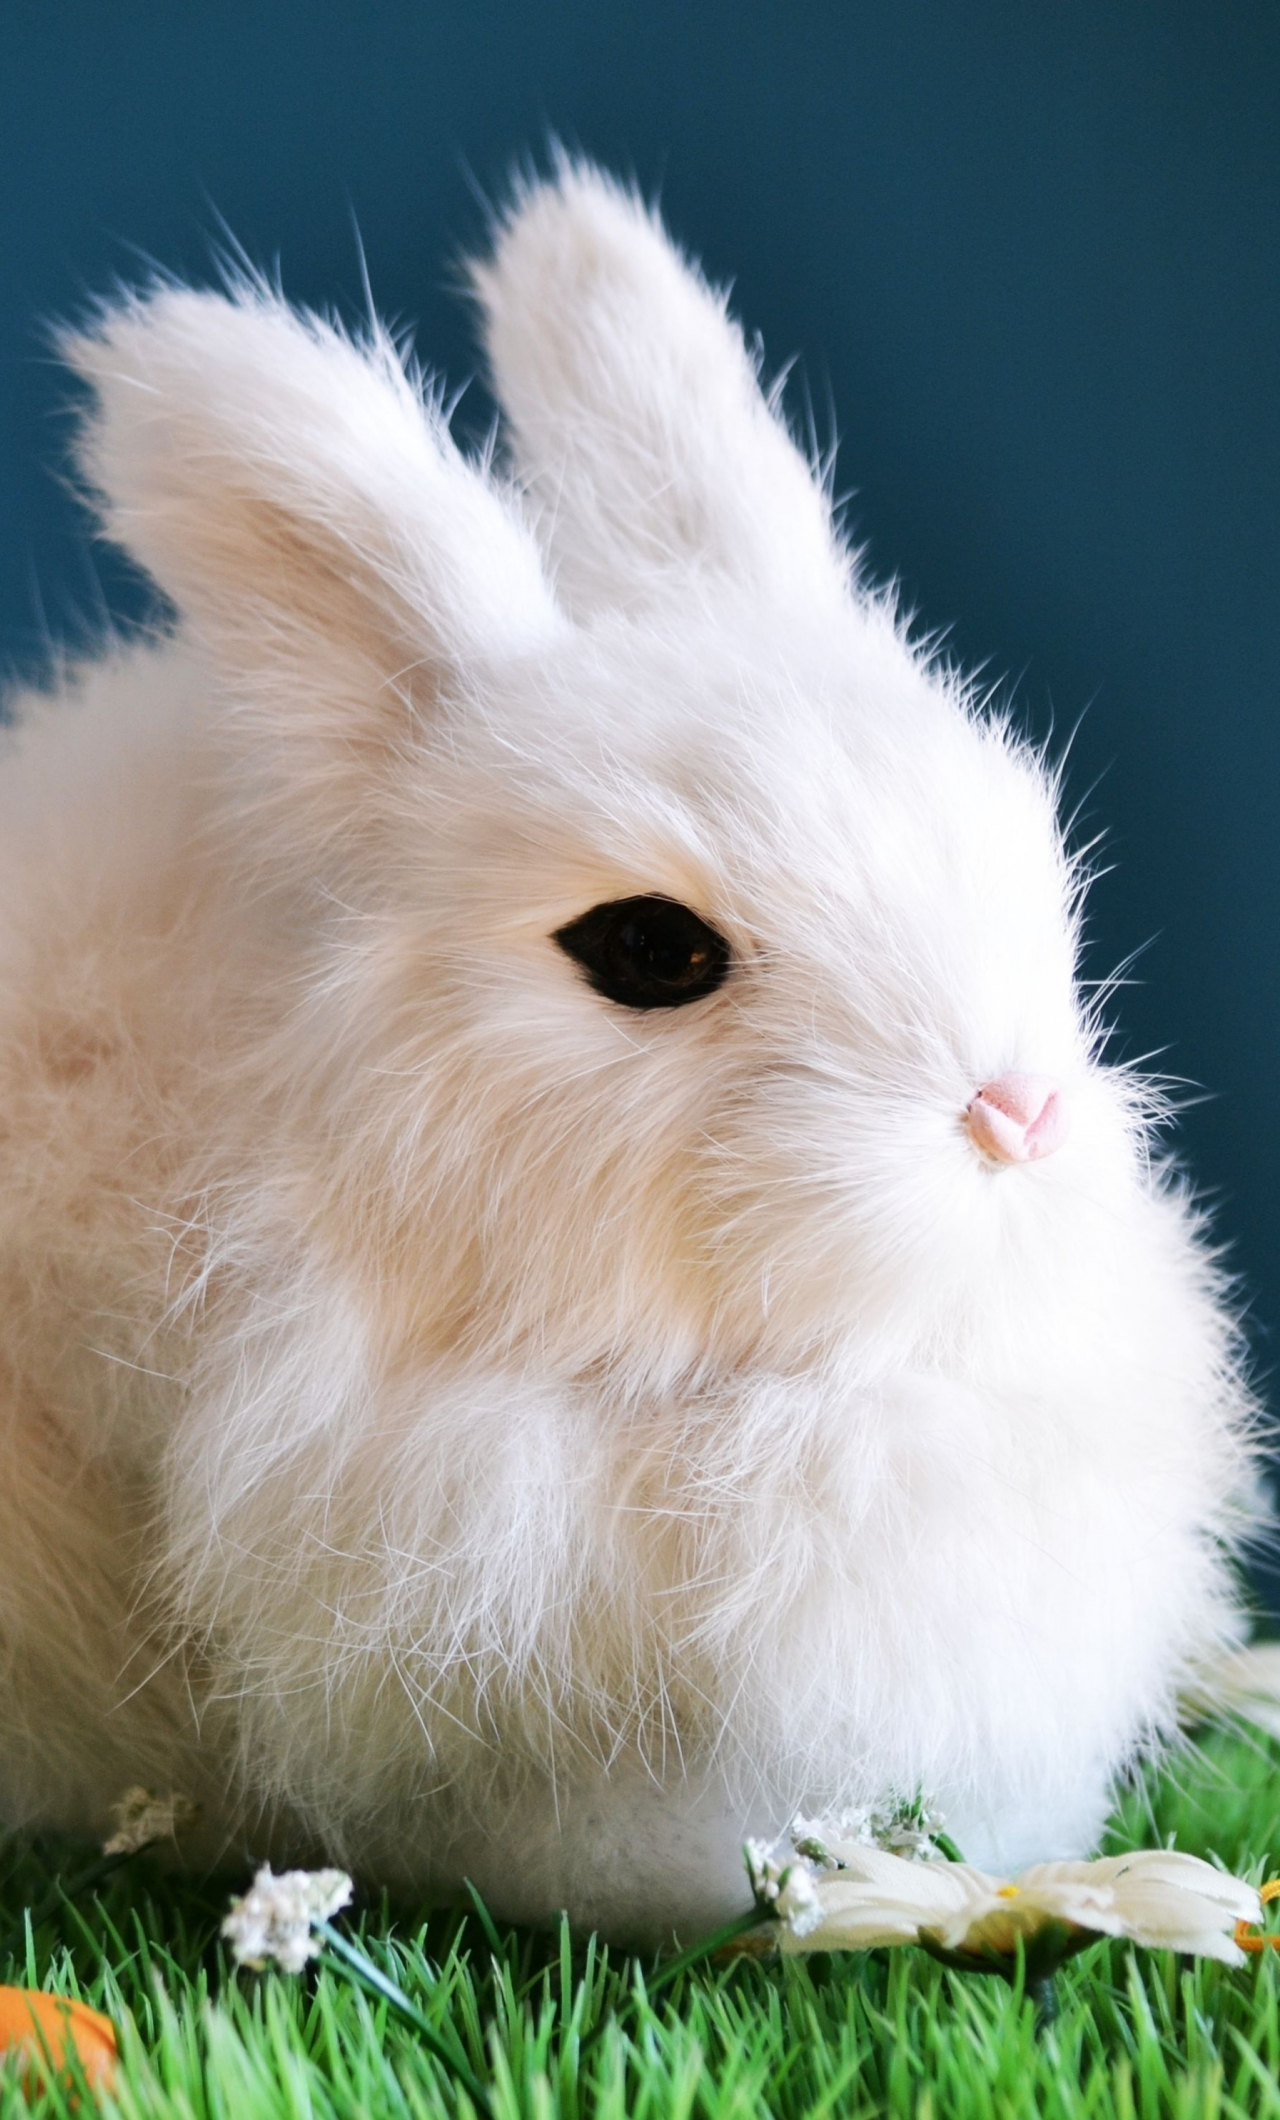 Rabbit Photos, Download The BEST Free Rabbit Stock Photos & HD Images